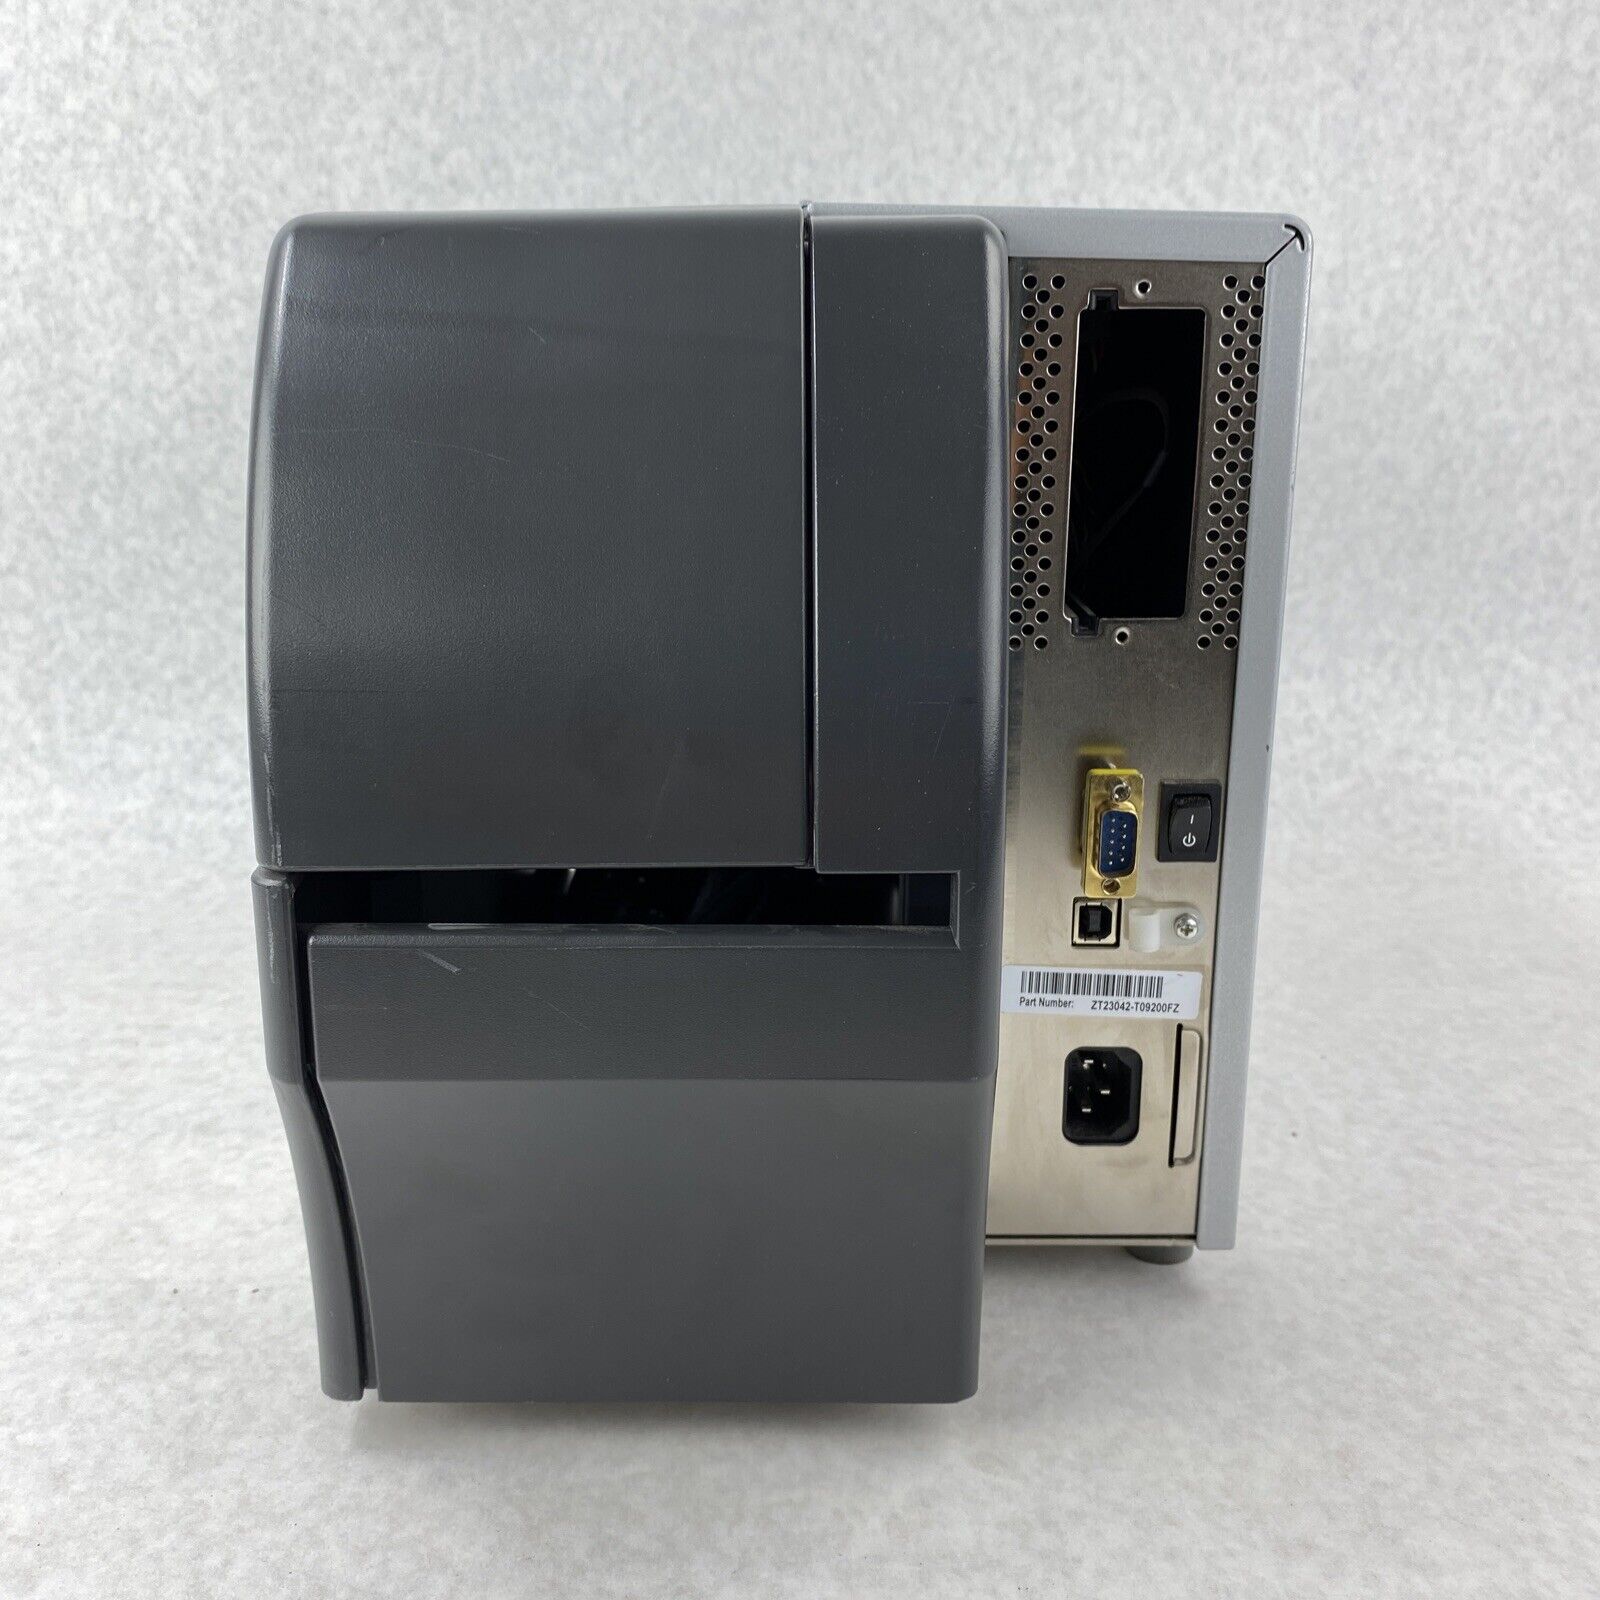 Zebra ZT230 Direct Thermal Barcode Label Printer ZT23042-T09200FZ USB & Serial